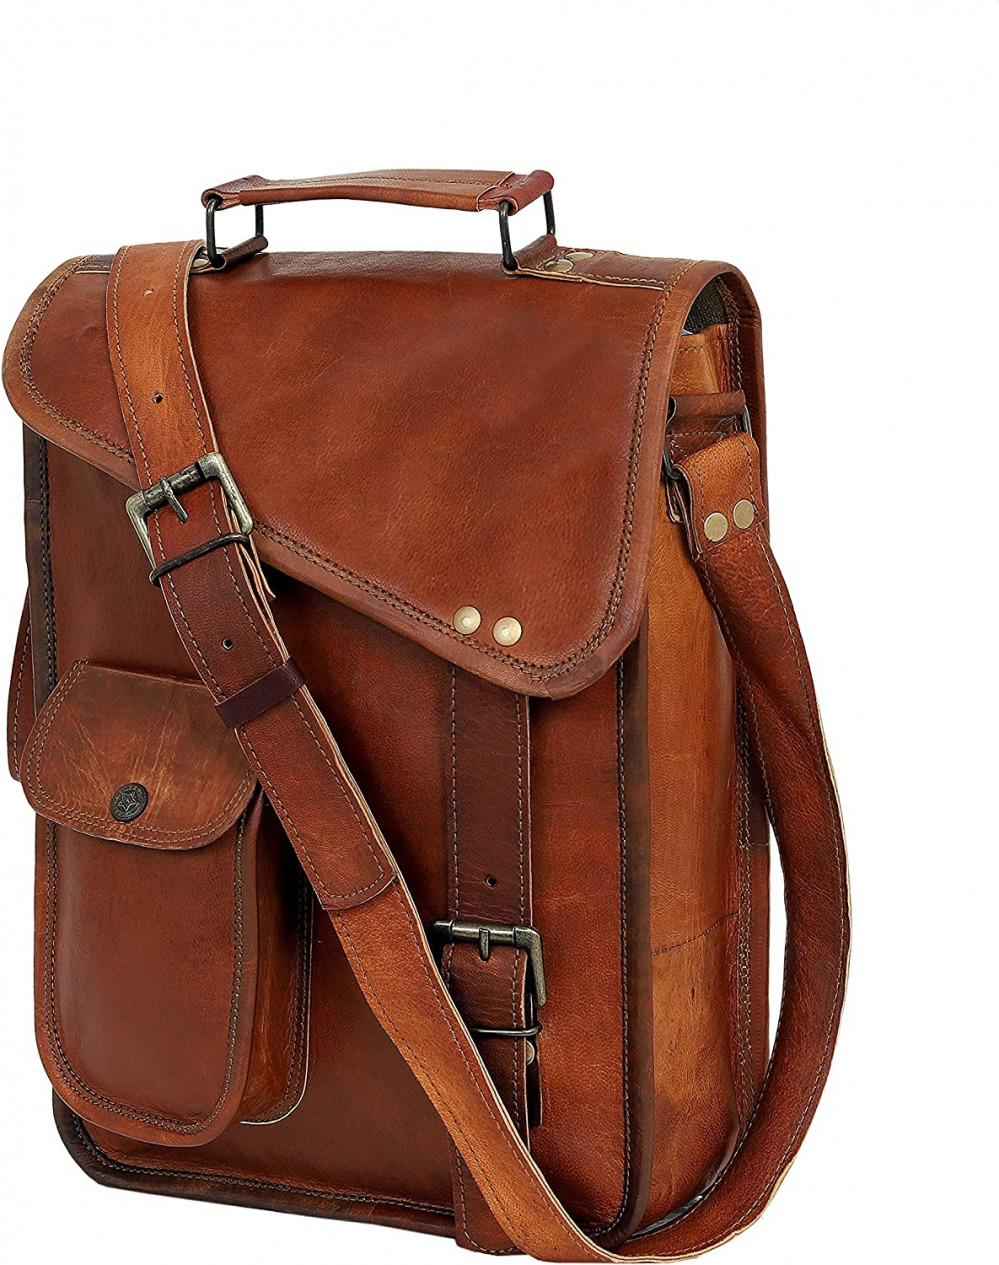 Leather satchel tablet bag laptop case office briefcase messenger 15 inch